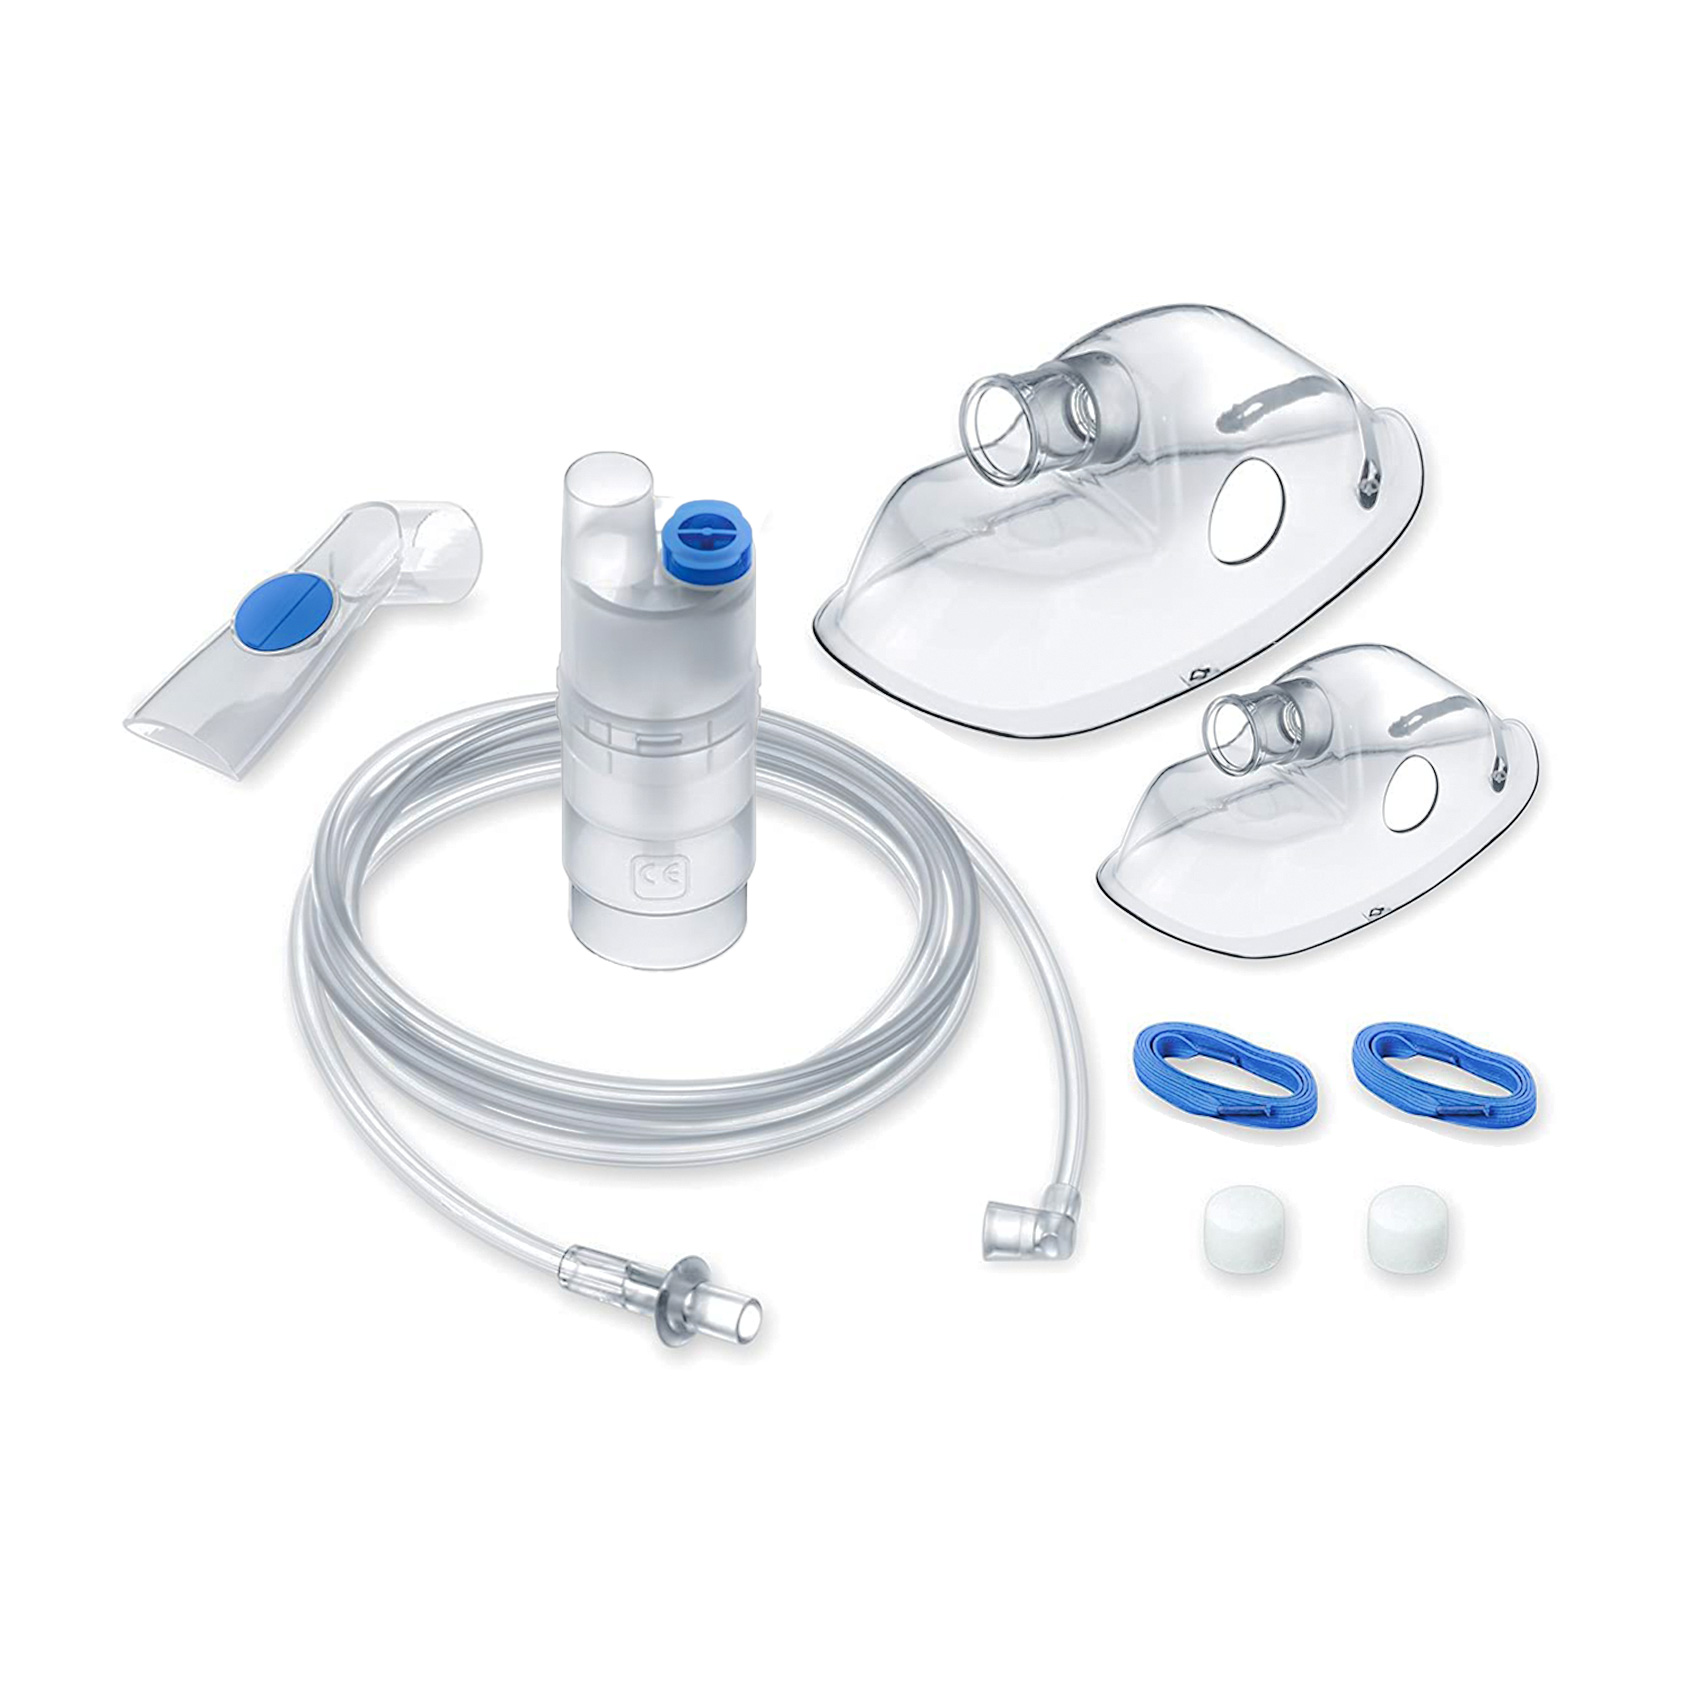 Nebulizer-Accessories-Kit